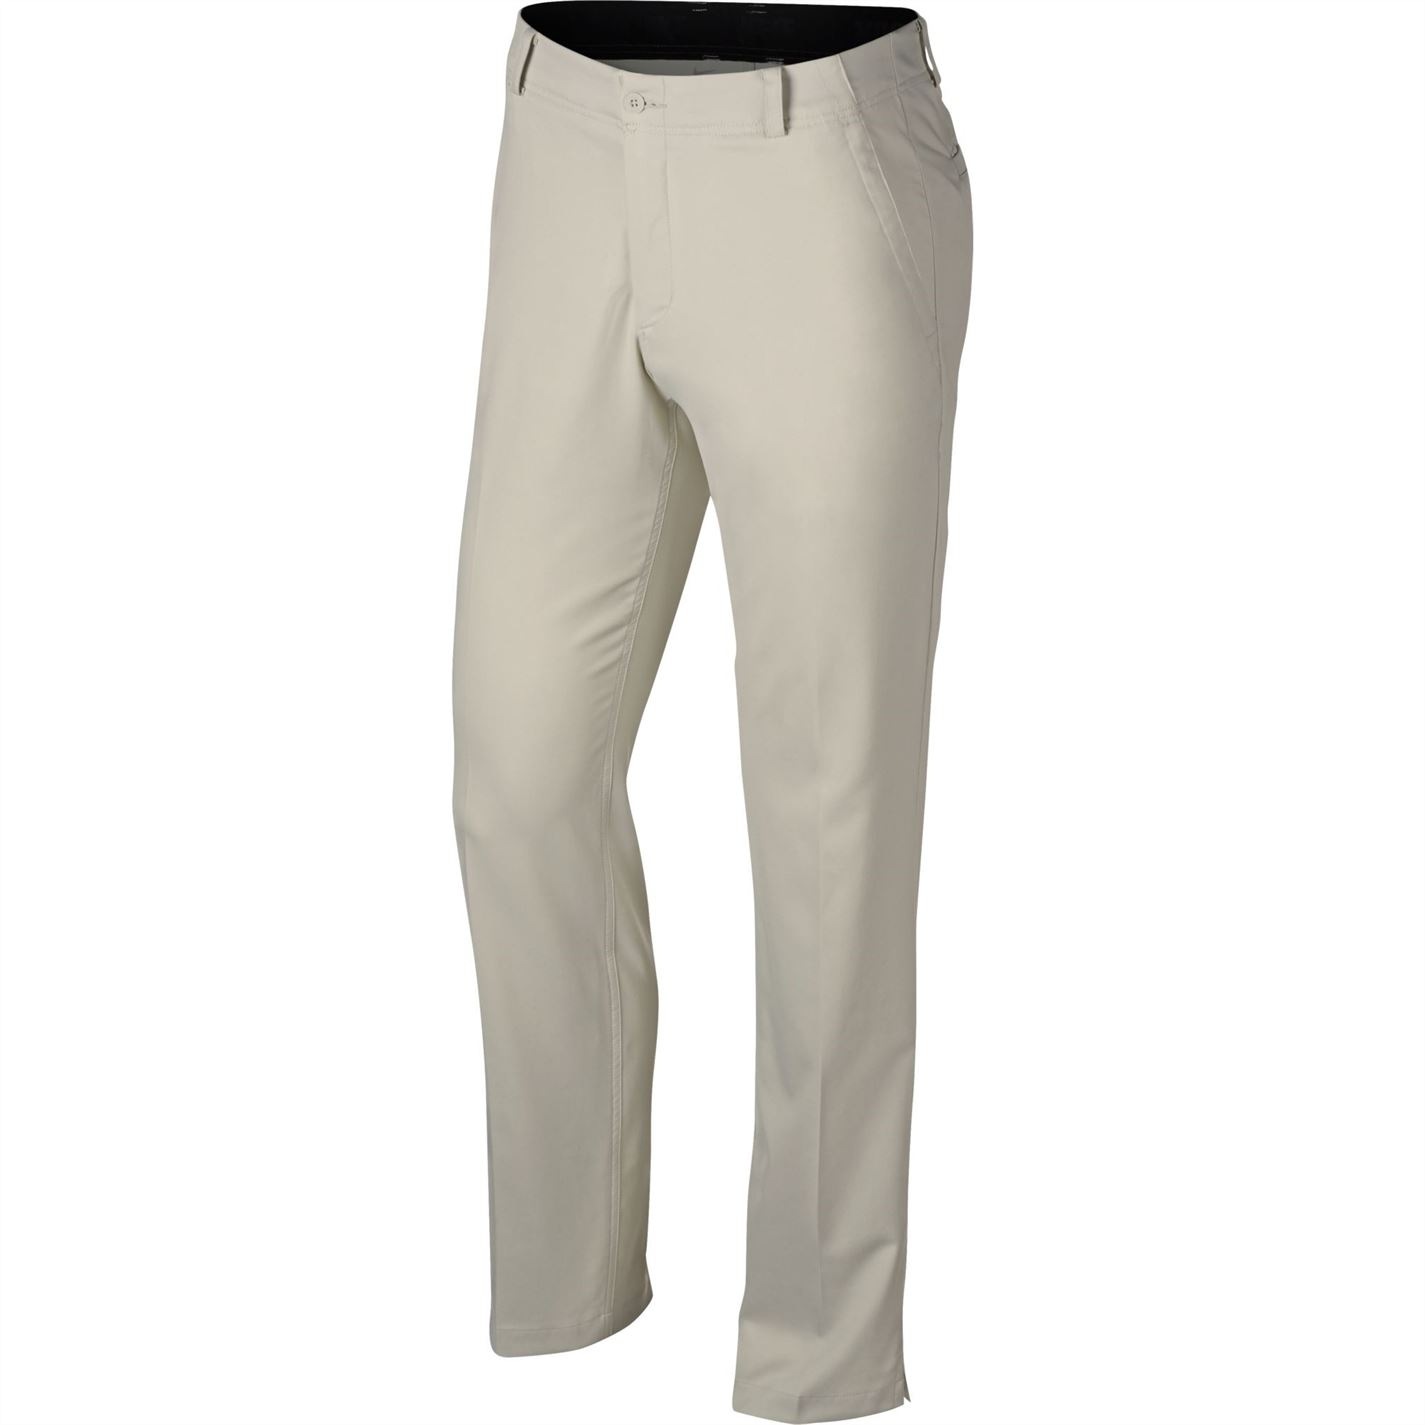 Pantalon Nike Flex Golf barbat